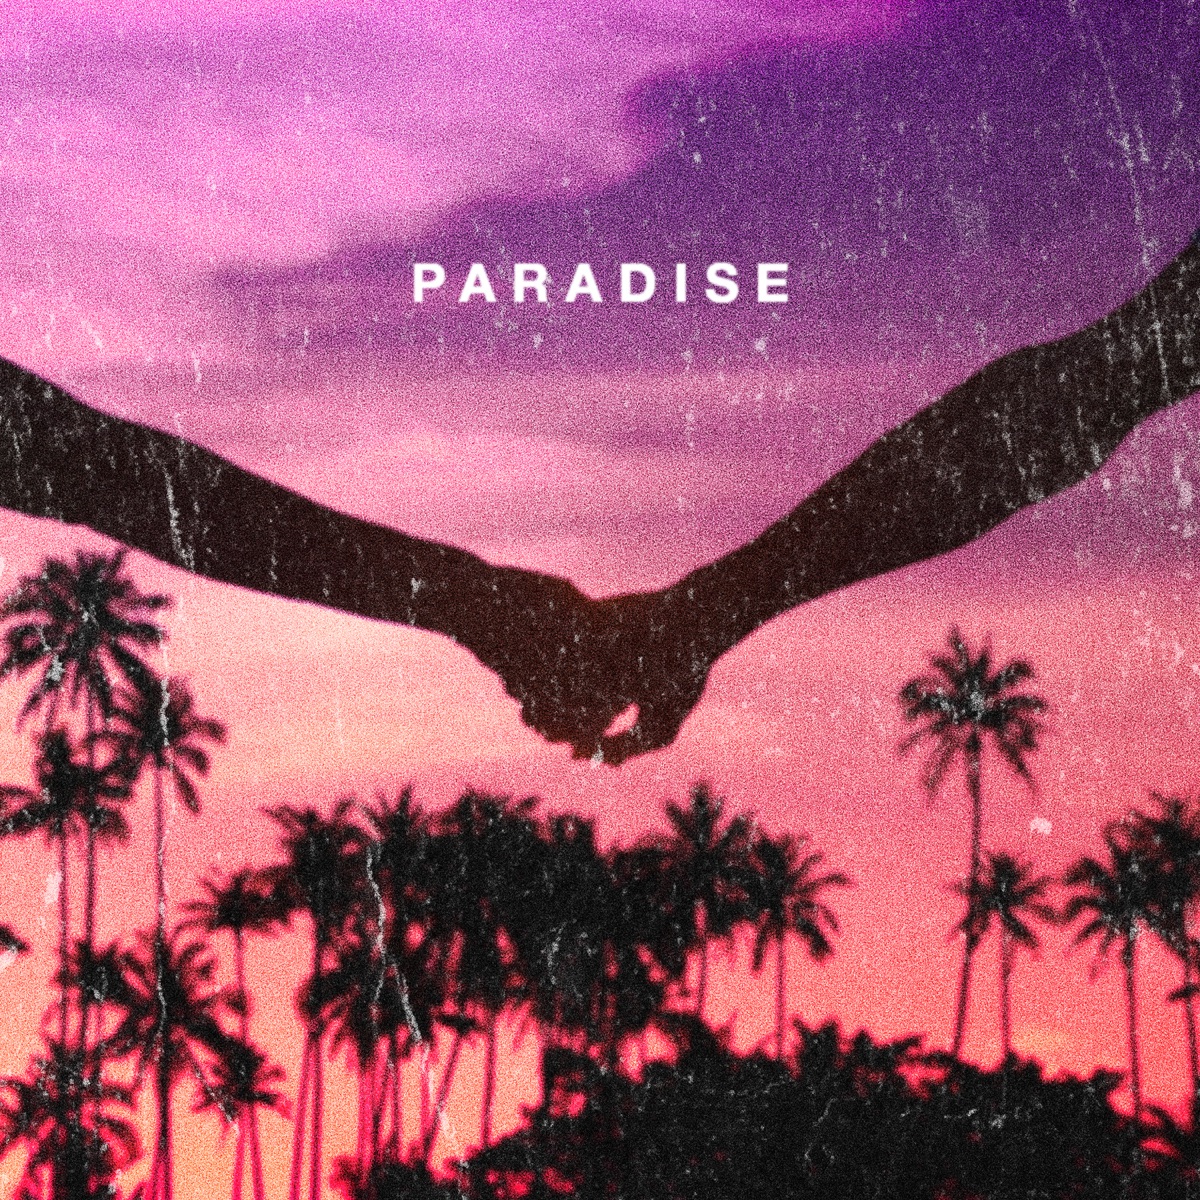 Deadsox ☆ – Nightmare / Paradise Lyrics